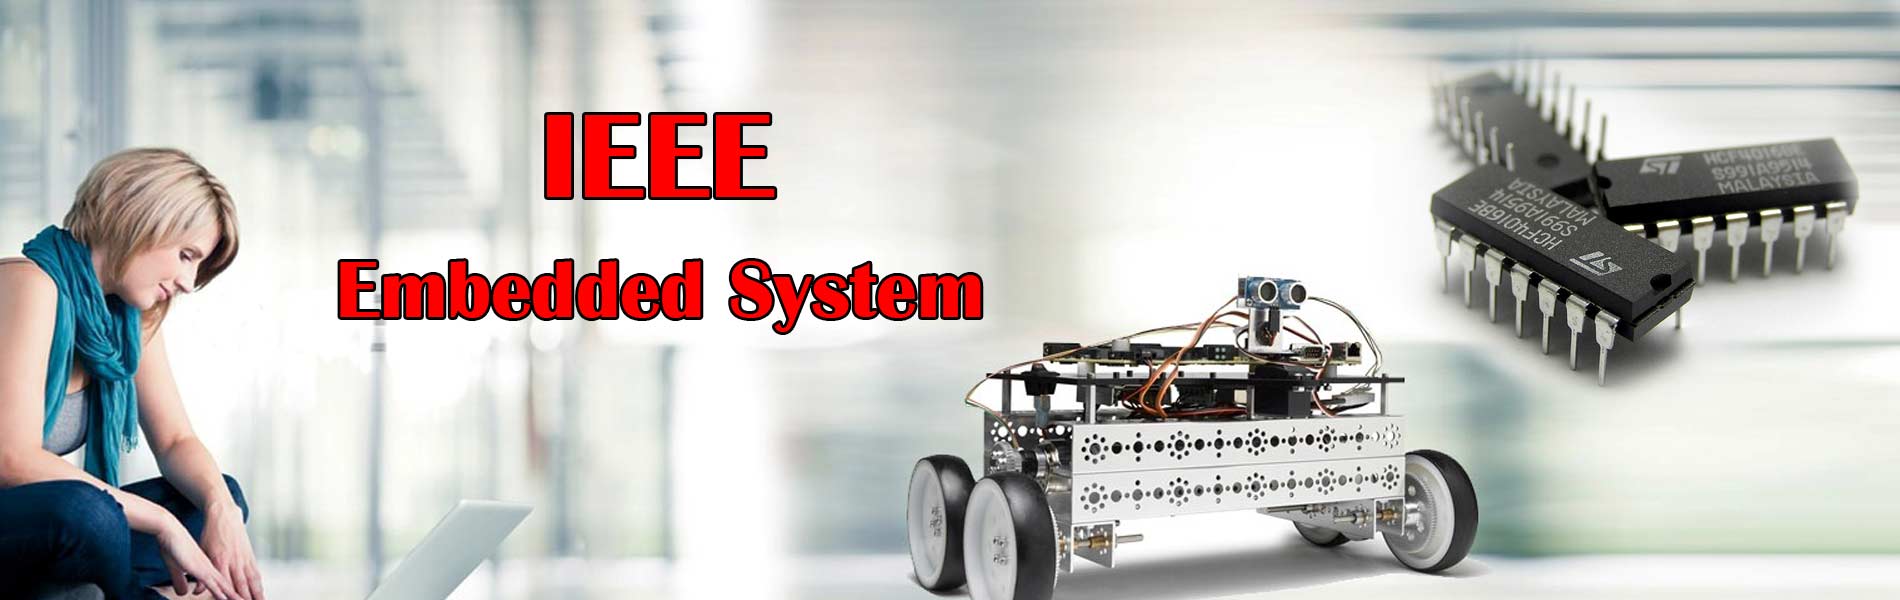 ieee-embeddedsystem-finalyear-project-in-chennai